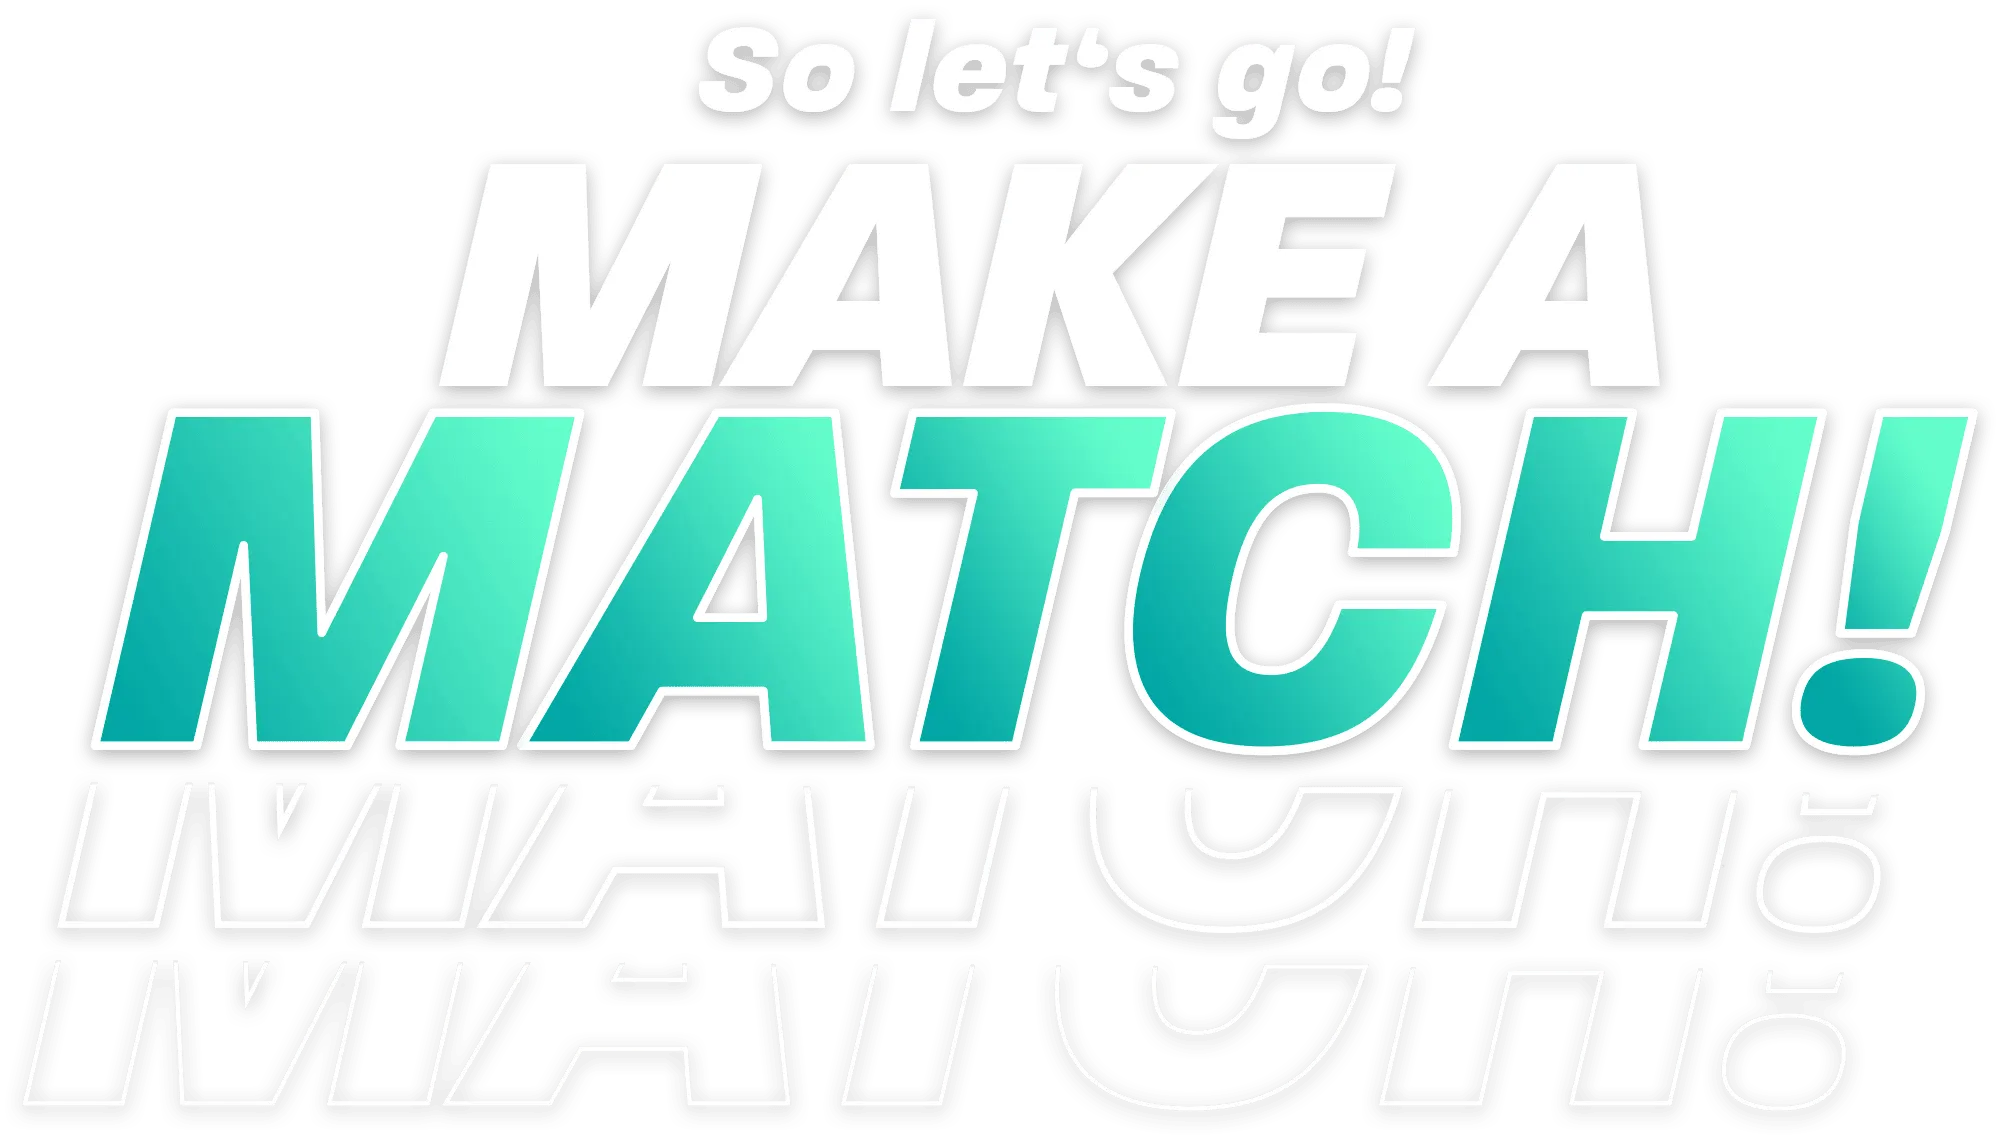 So let‘s go! Make a match!